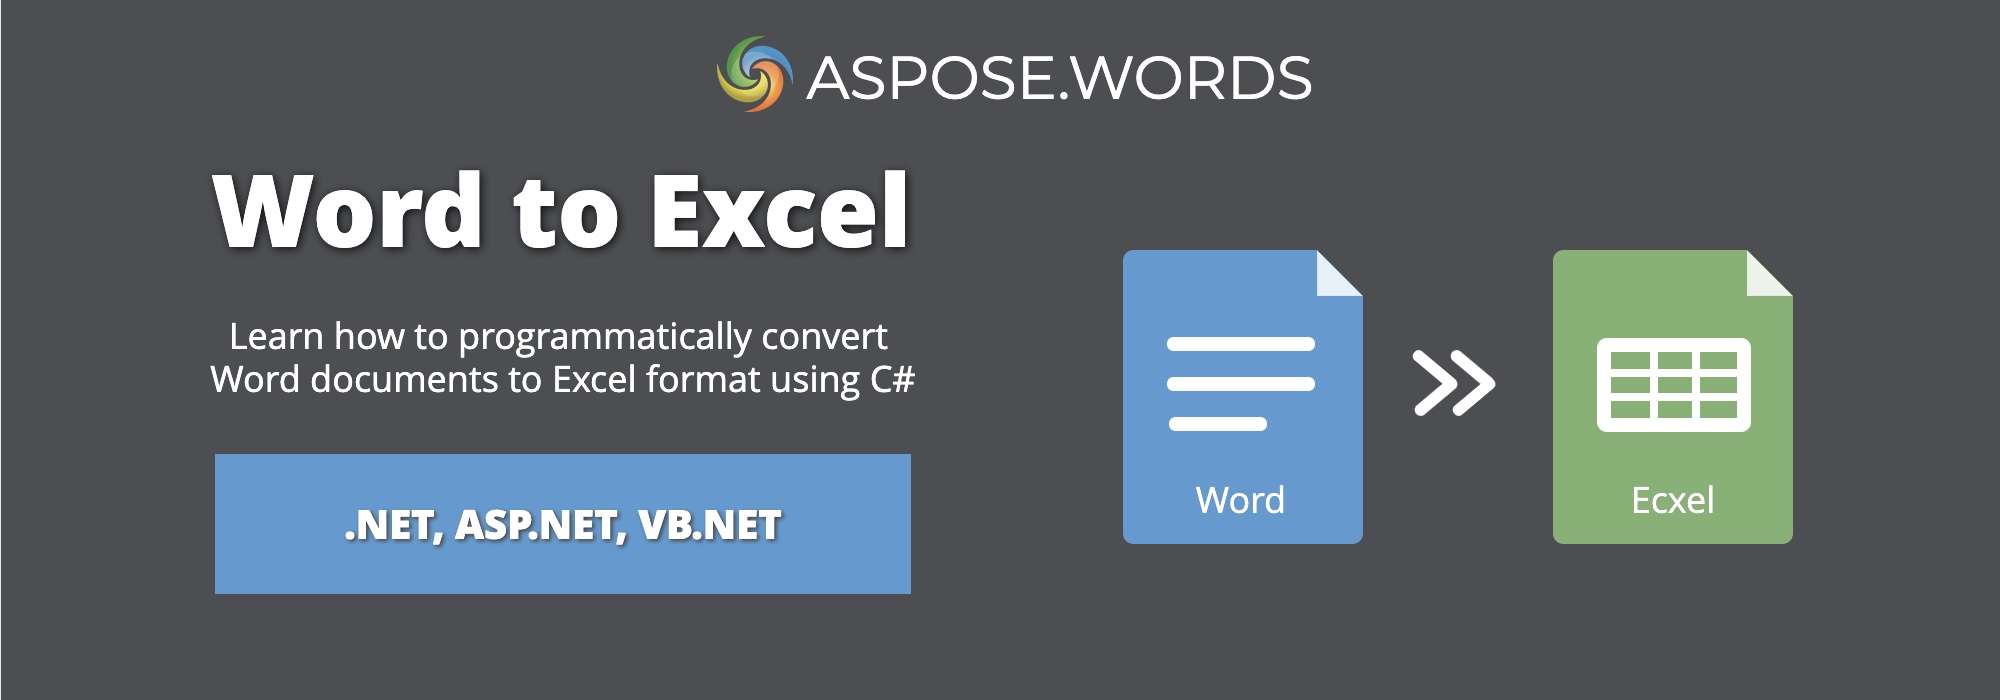 Convertir Word a Excel en C# | Convertir DOCX a XLSX en C#